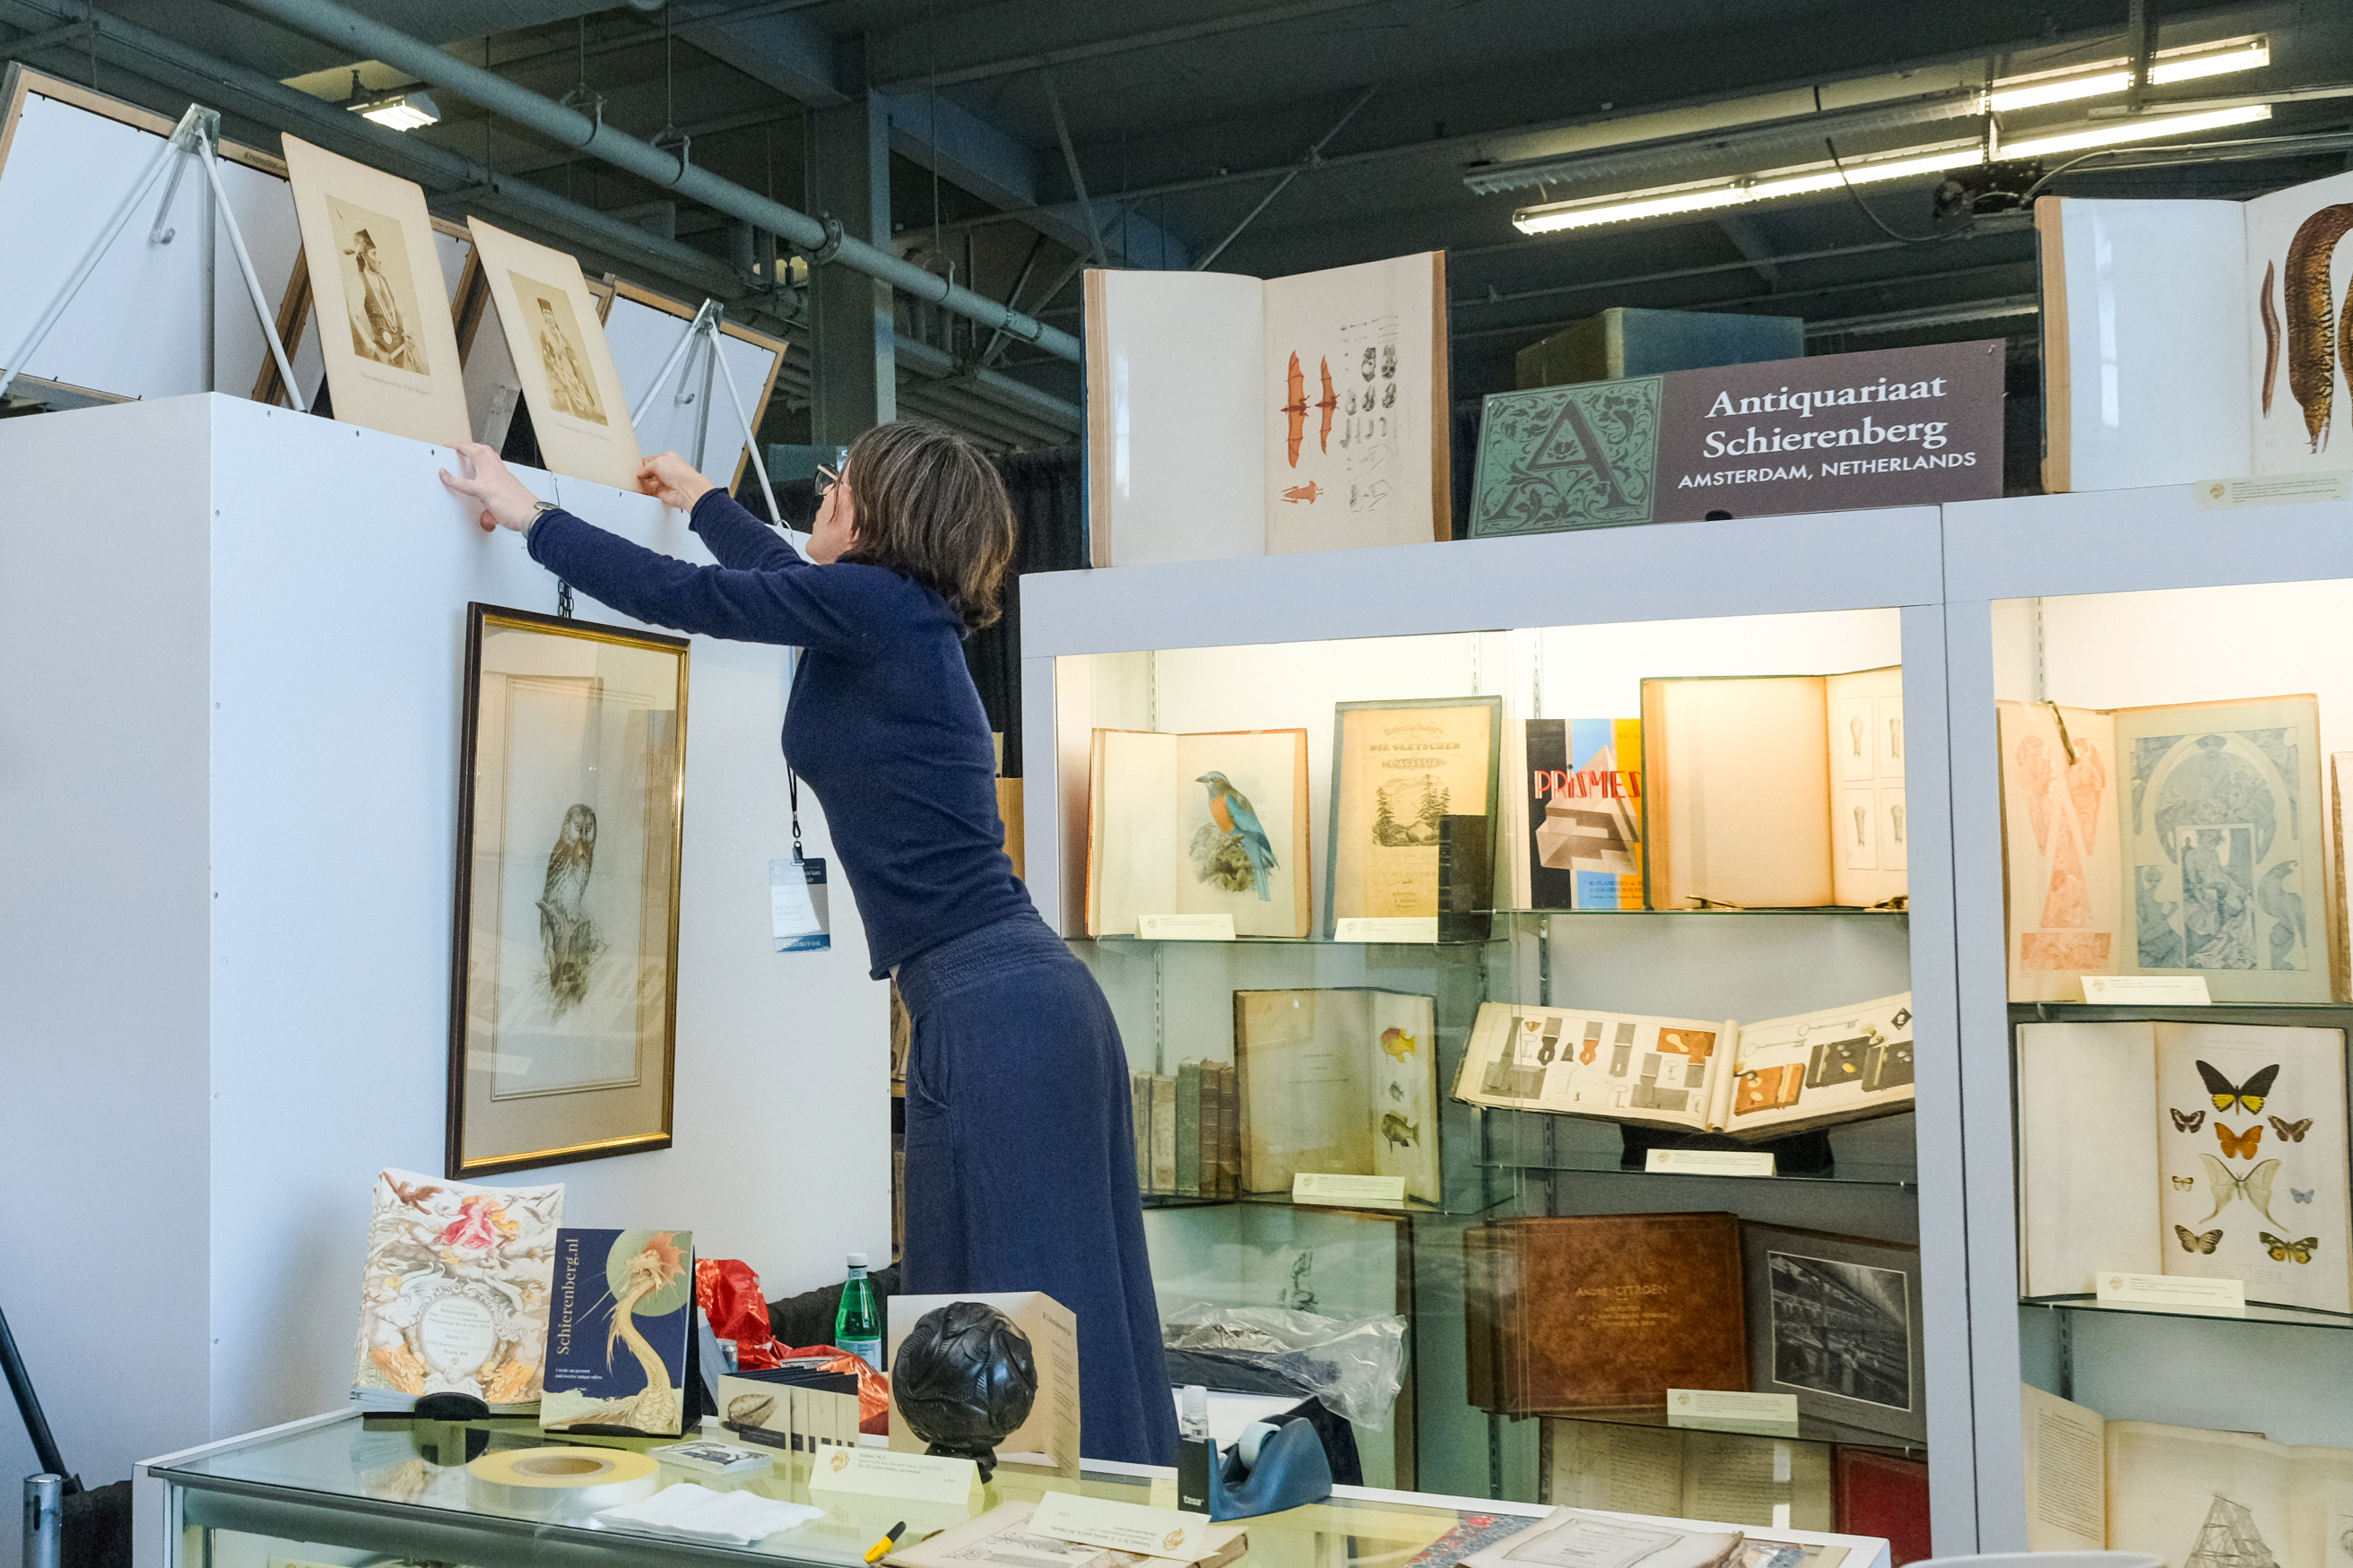 A woman is arranging framed artworks on a high shelf at an antique book fair.